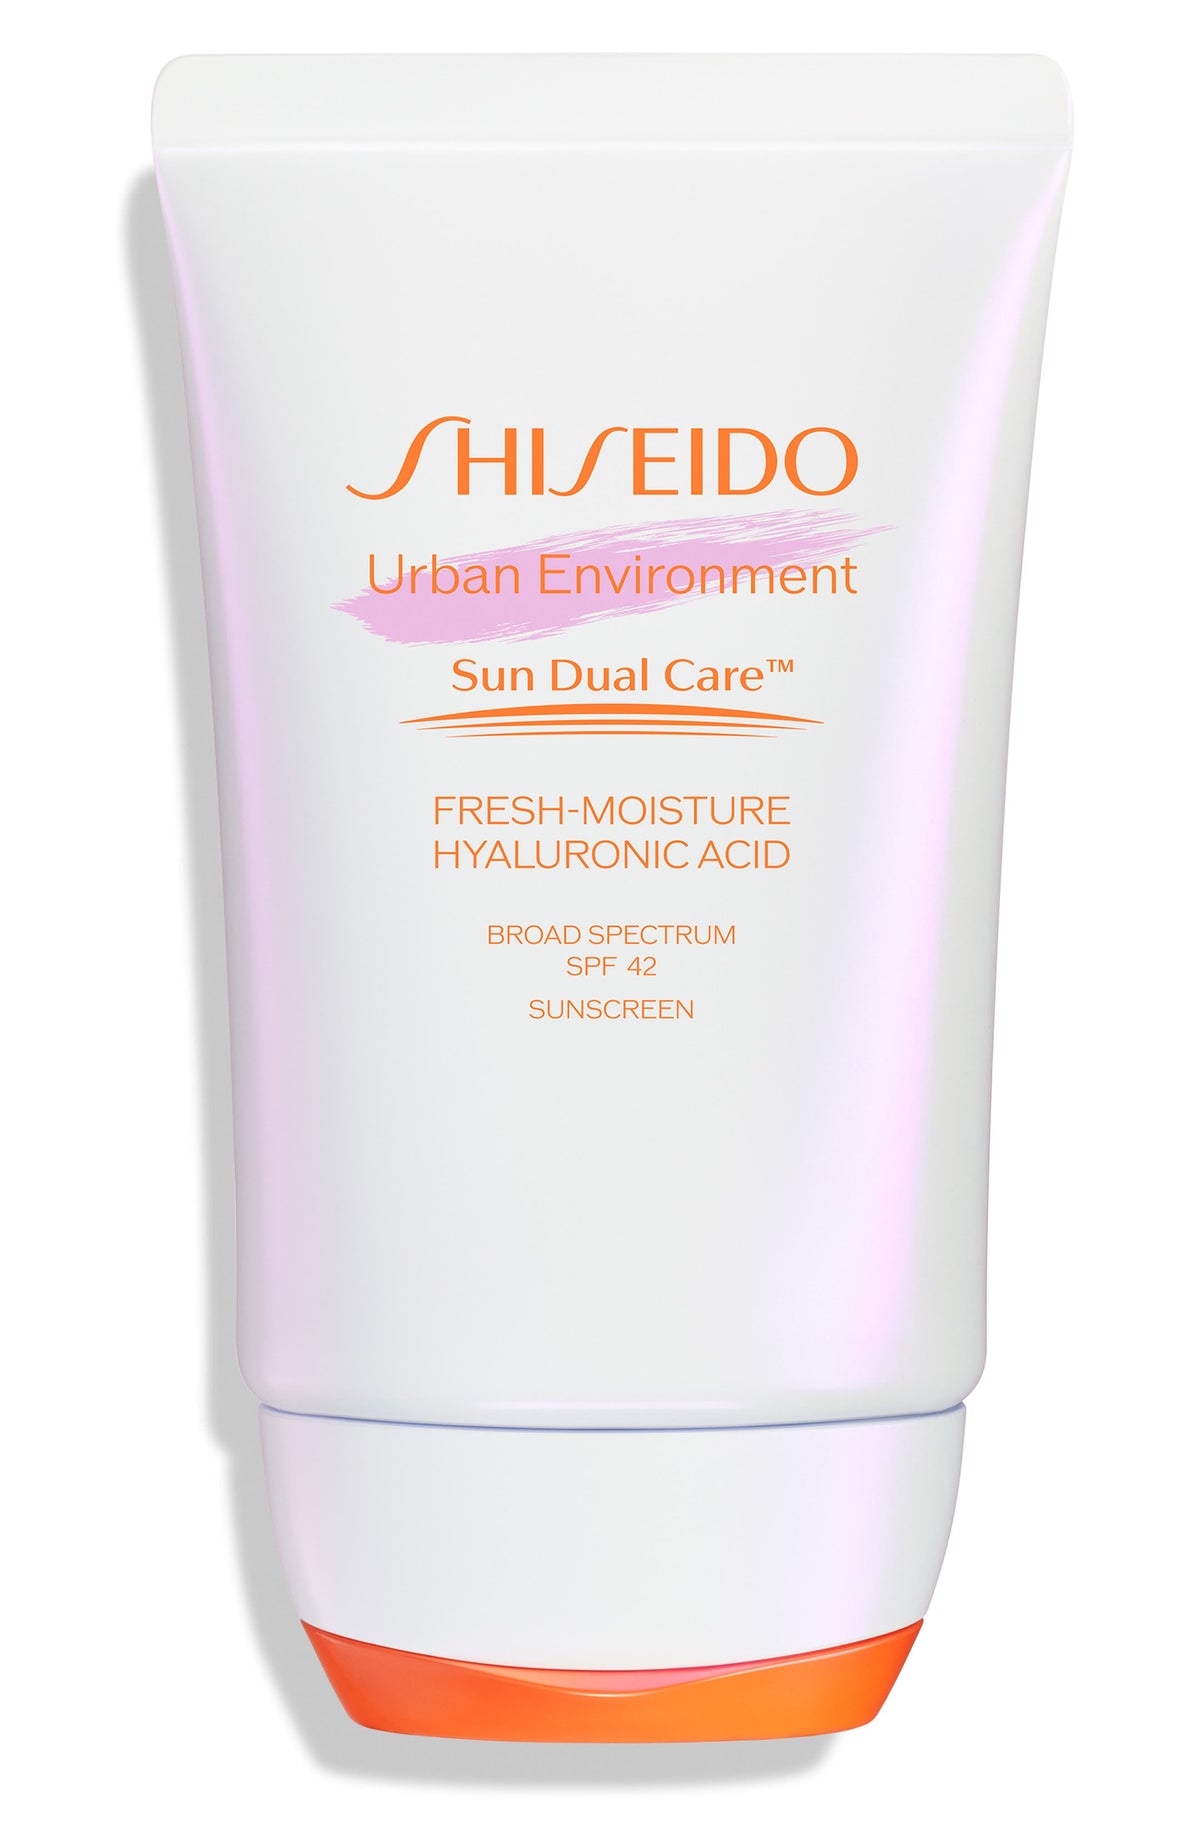 Shiseido Urban Environment Sun Dual Care Fresh-Moisture Hyaluronic Acid SPF 42, 50mL